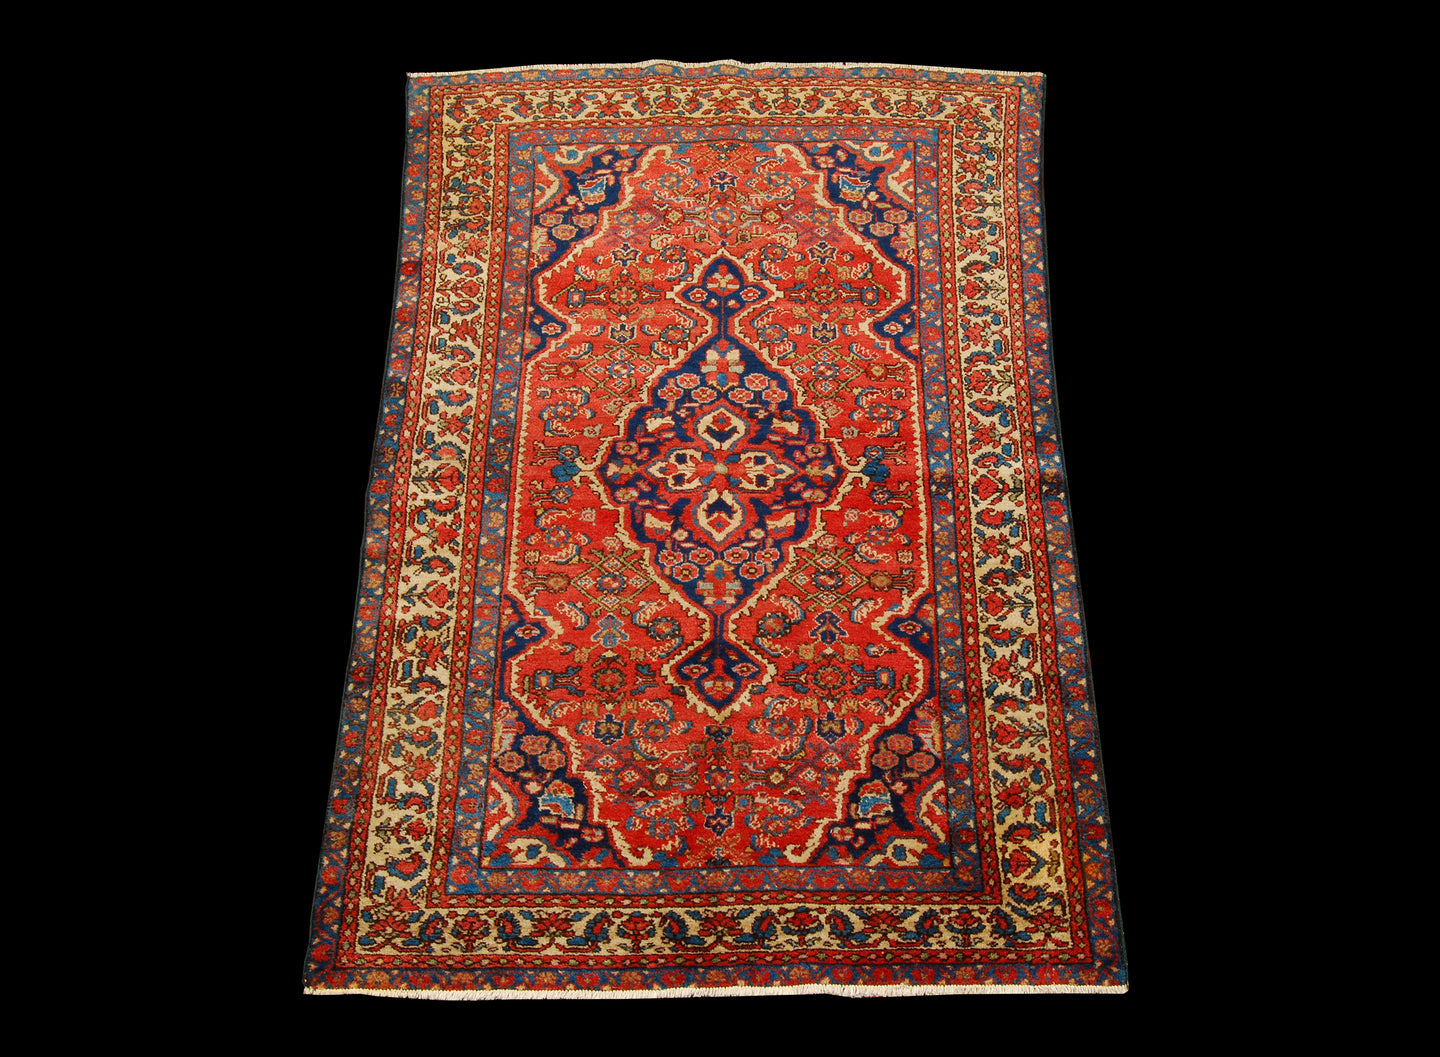 Authentic original hand knotted carpet 205x135 CM BORCHALOO